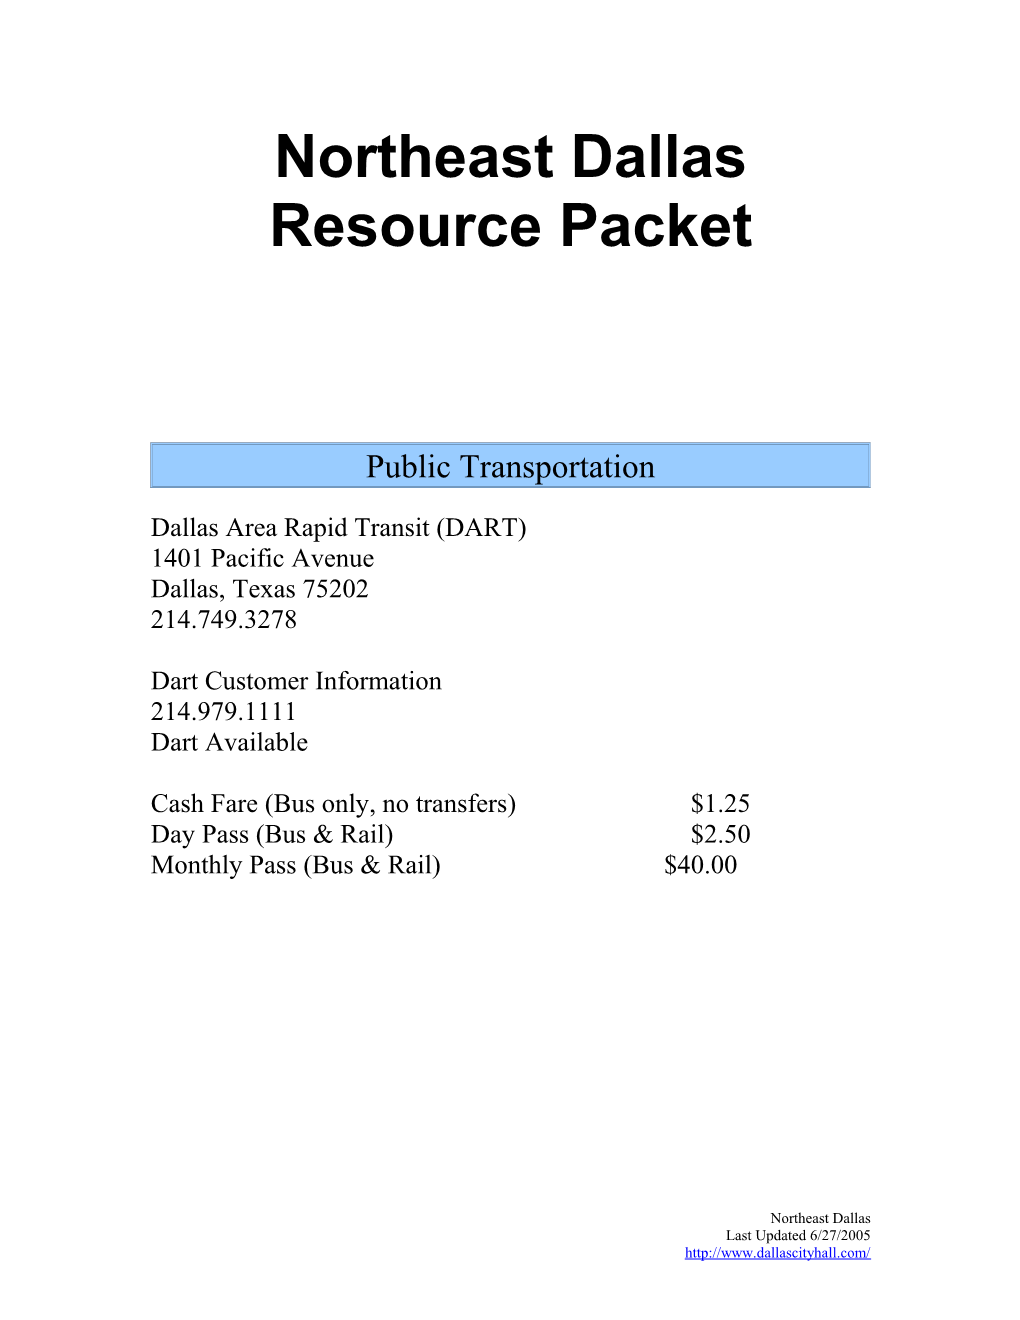 Northeast Dallas Resource Packet